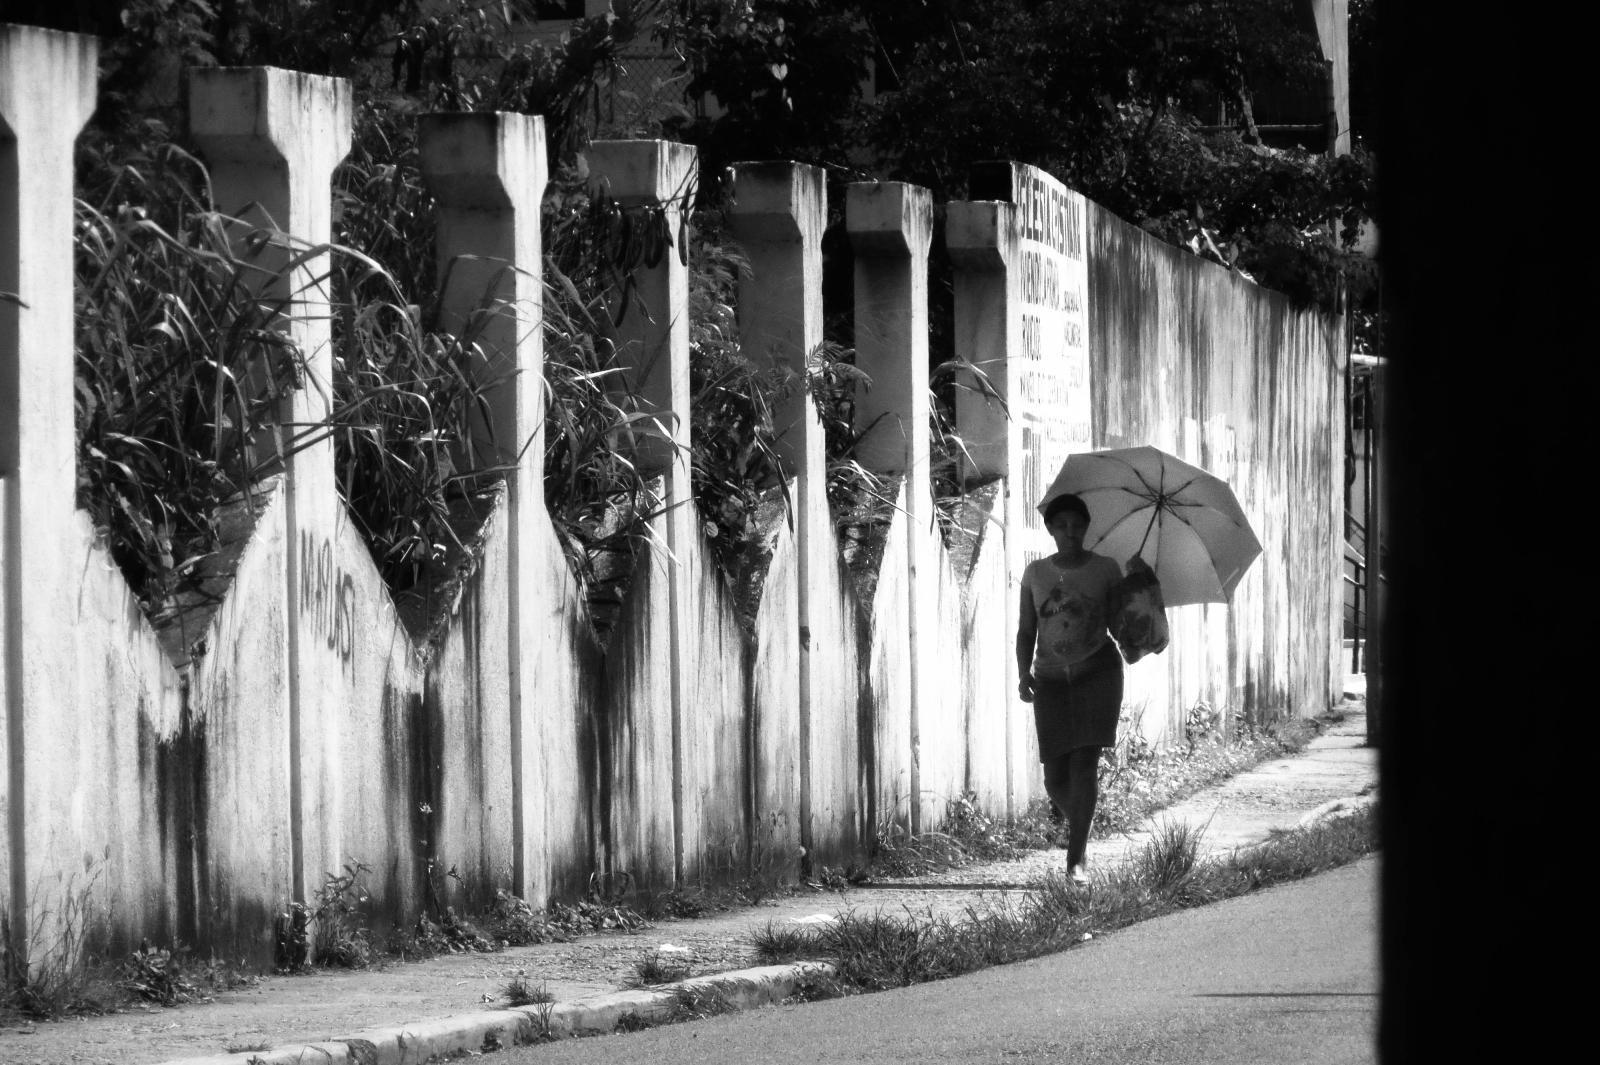 Umbrella Lady | Buy this image